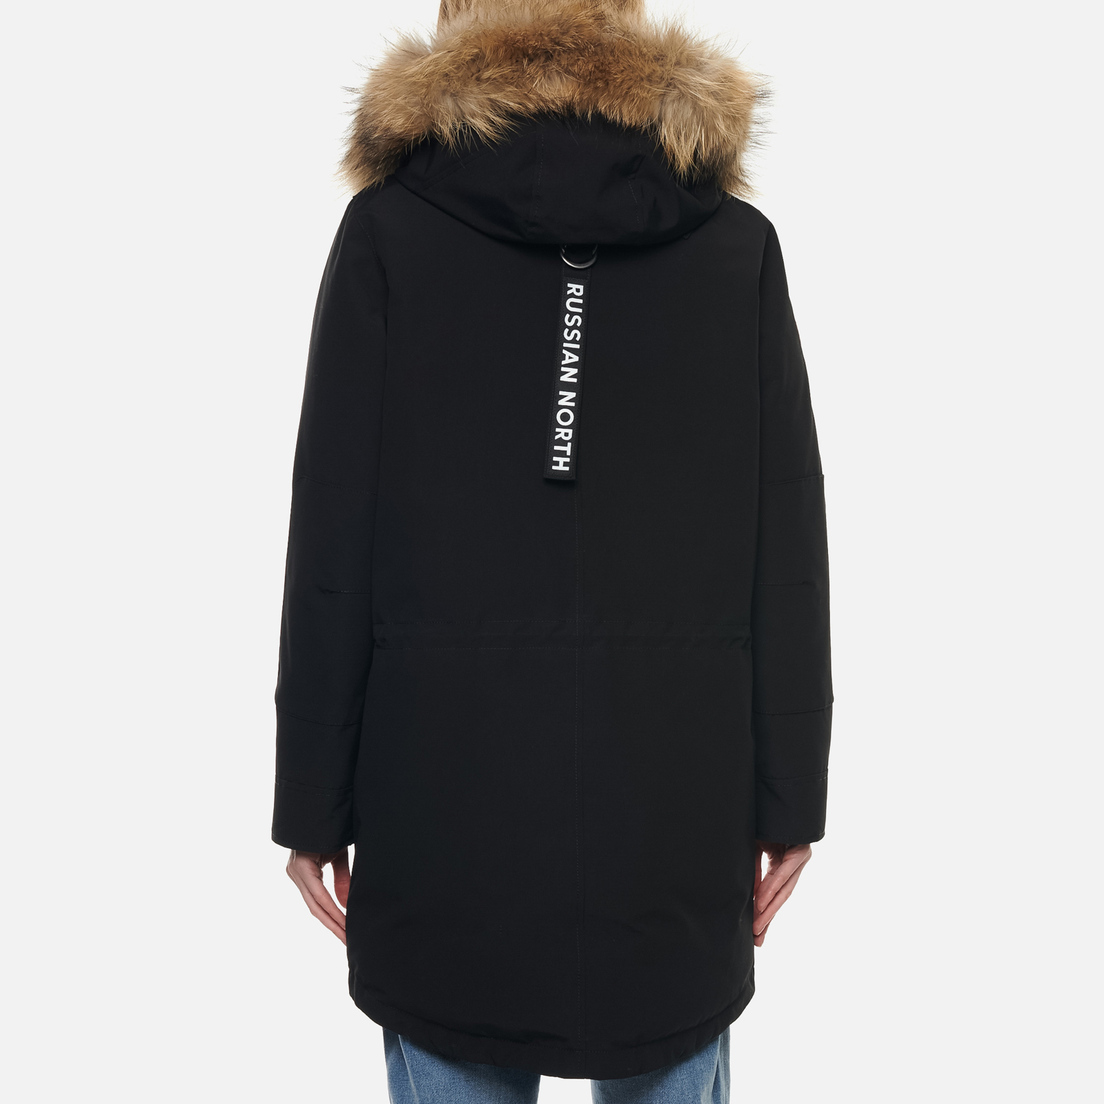 Arctic Explorer Женская куртка парка Chill